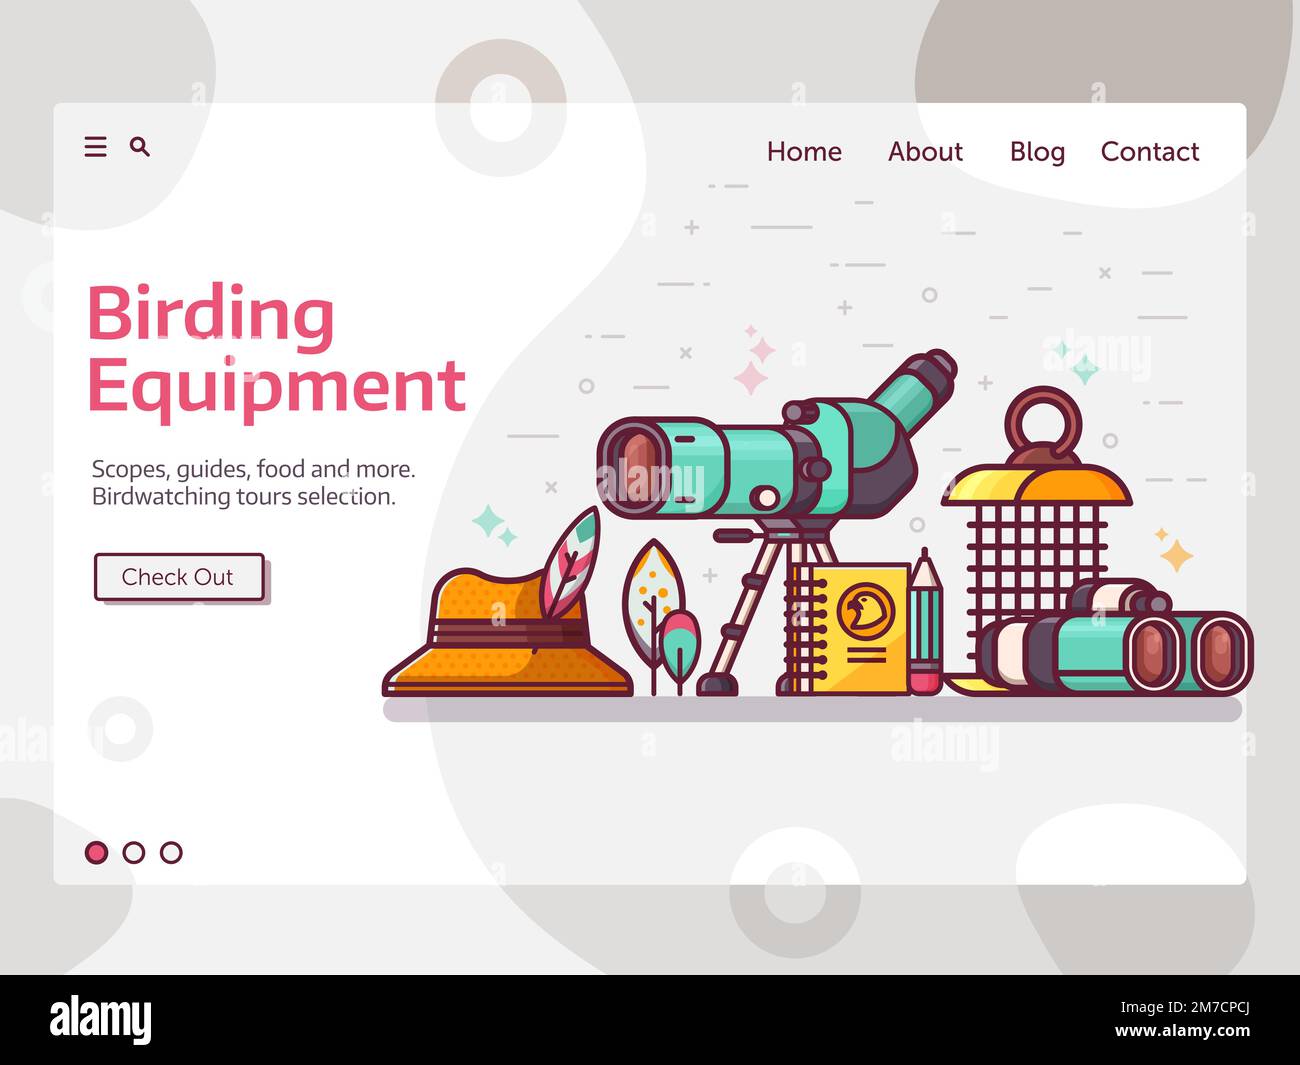 Birding Web Banner in Line Art Design Stock Vector